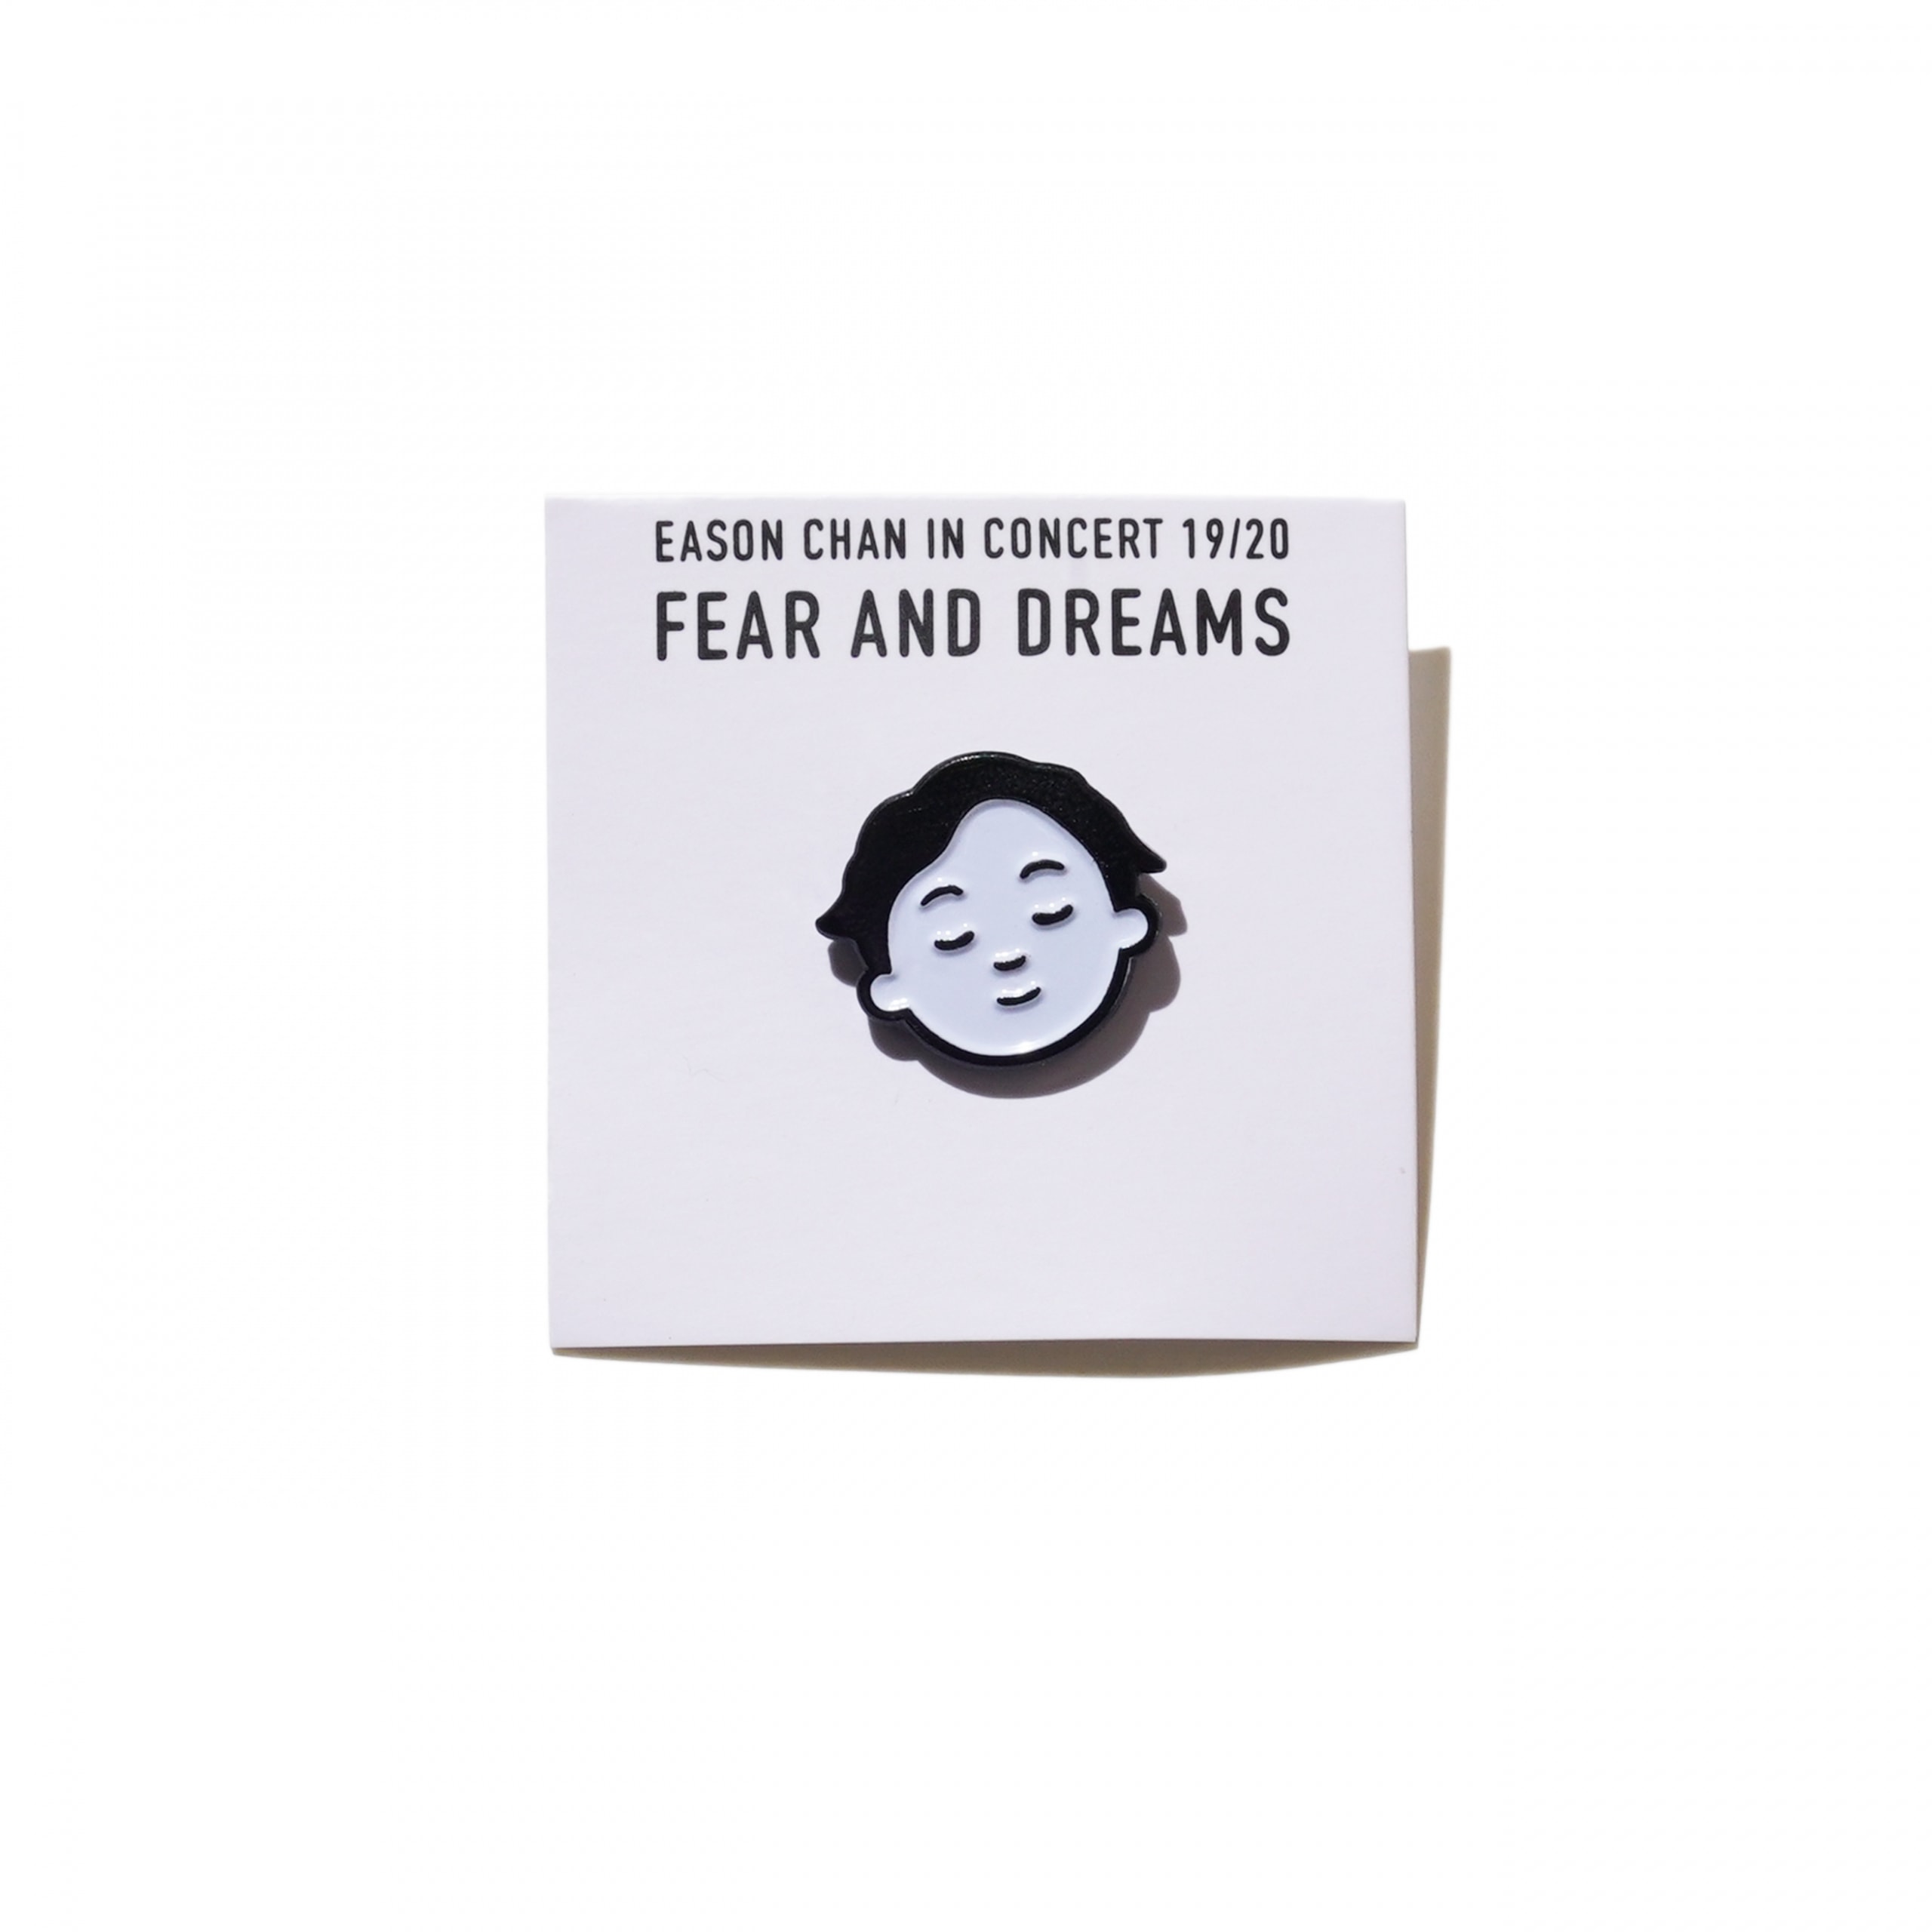 陳奕迅「Fear and Dreams 演唱會」紀念產品系列一覽